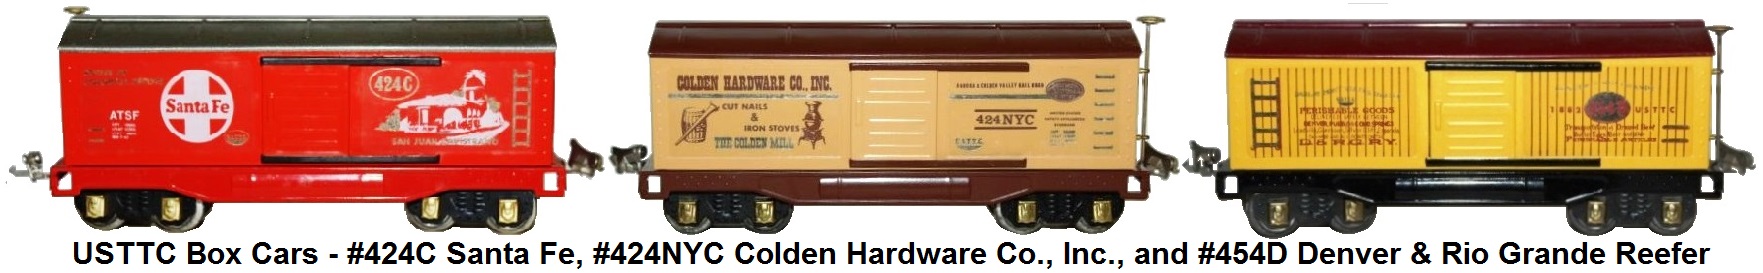 USTTC Box Cars - includes #424C Santa Fe, #424NYC Colden Hardware Co., Inc., and #454D Denver & Rio Grande Reefer